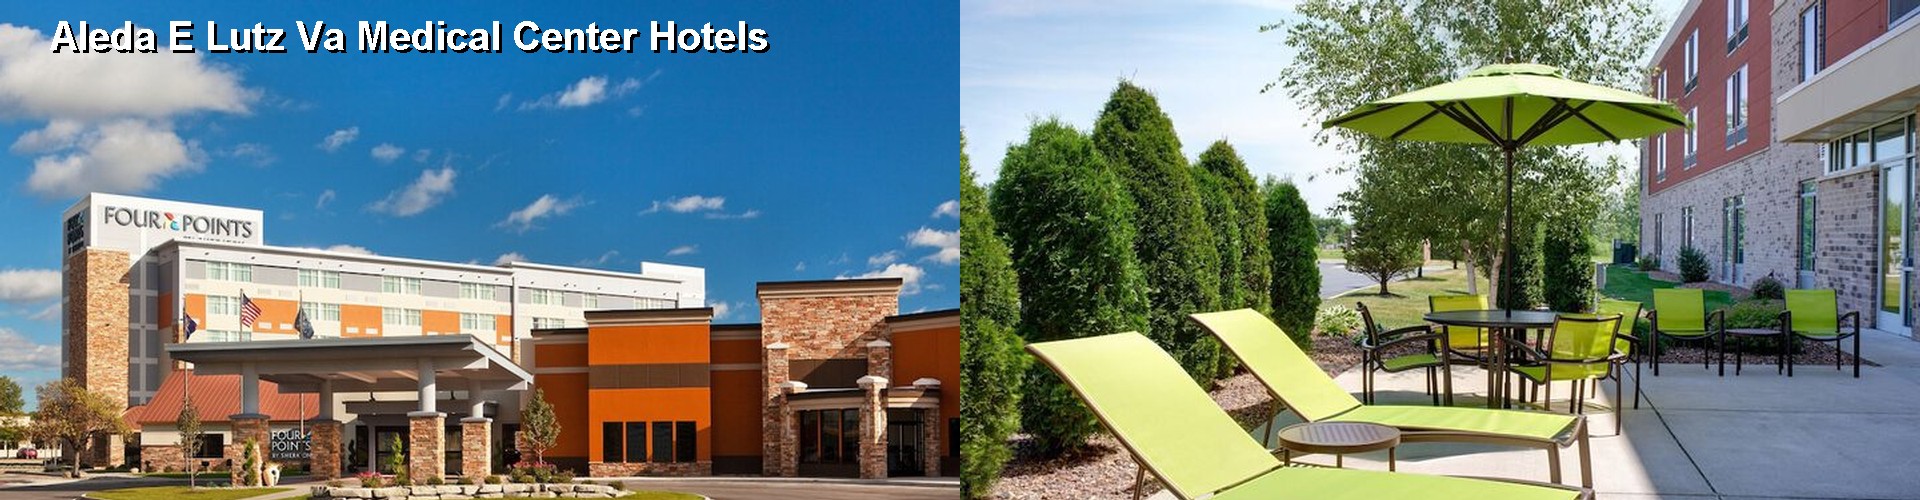 5 Best Hotels near Aleda E Lutz Va Medical Center